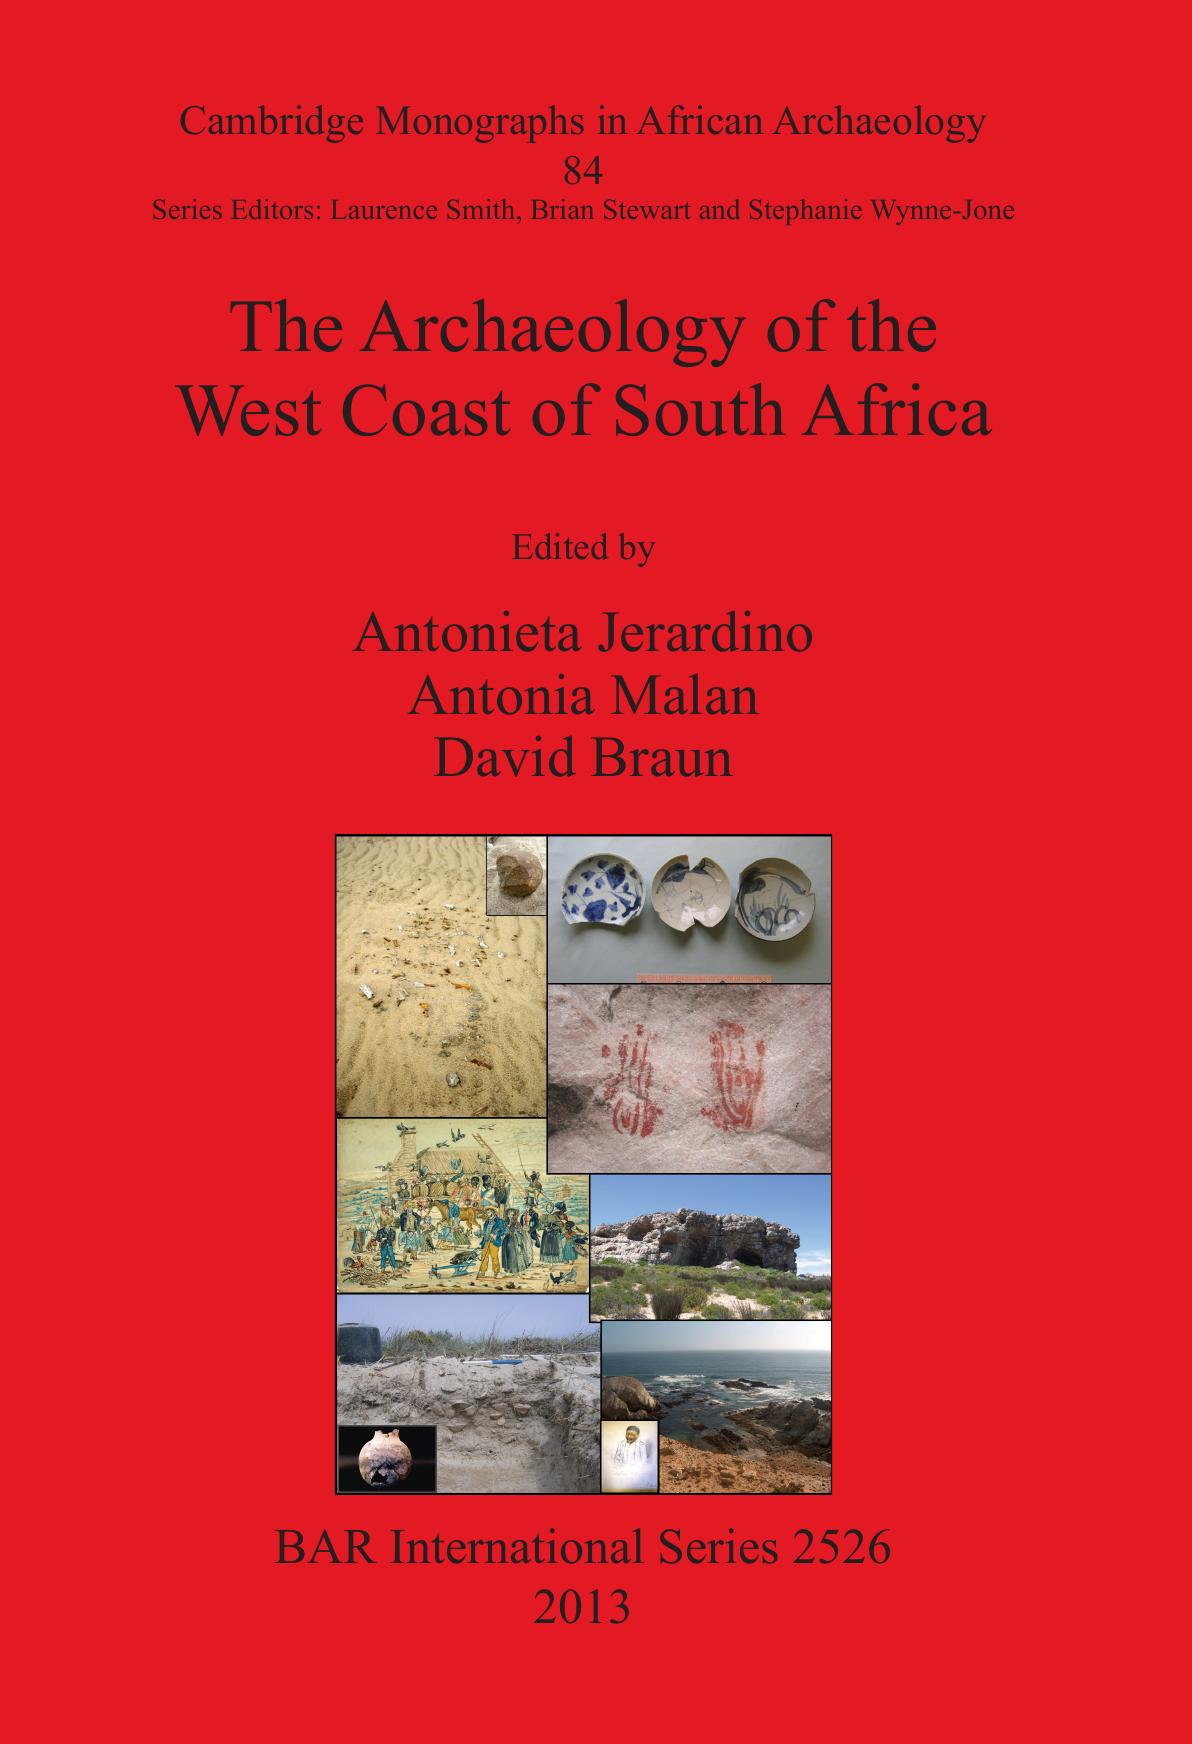 The Archaeology of the West Coast of South Africa by Antonieta Jerardino (editor) Antonia Malan (editor) David Braun (editor)